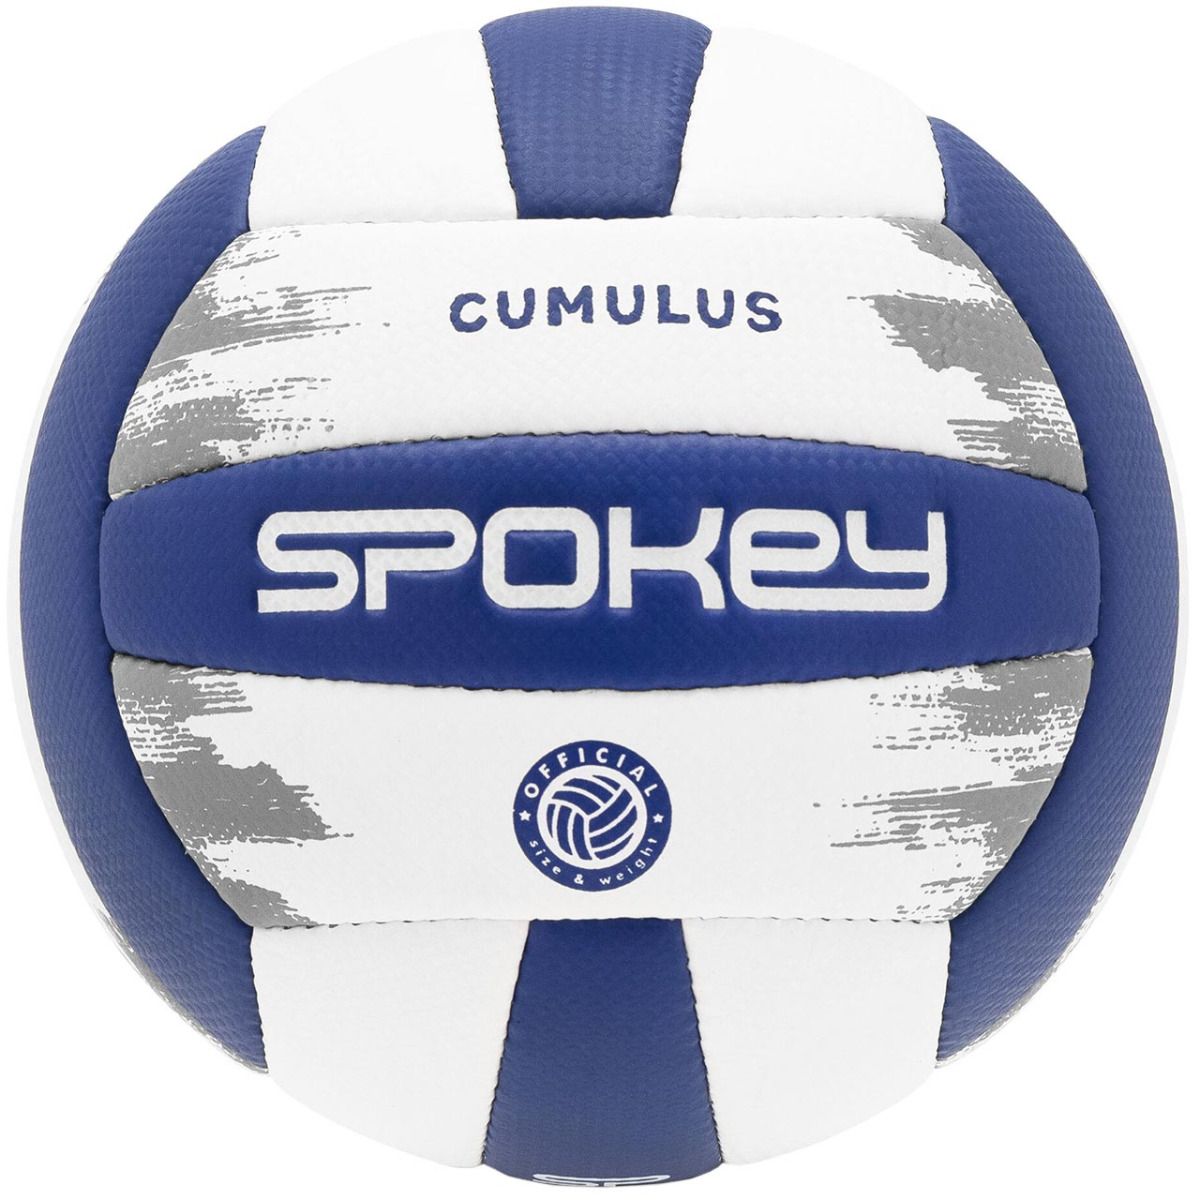 Spokey Volleyball Cumulus Pro 942595